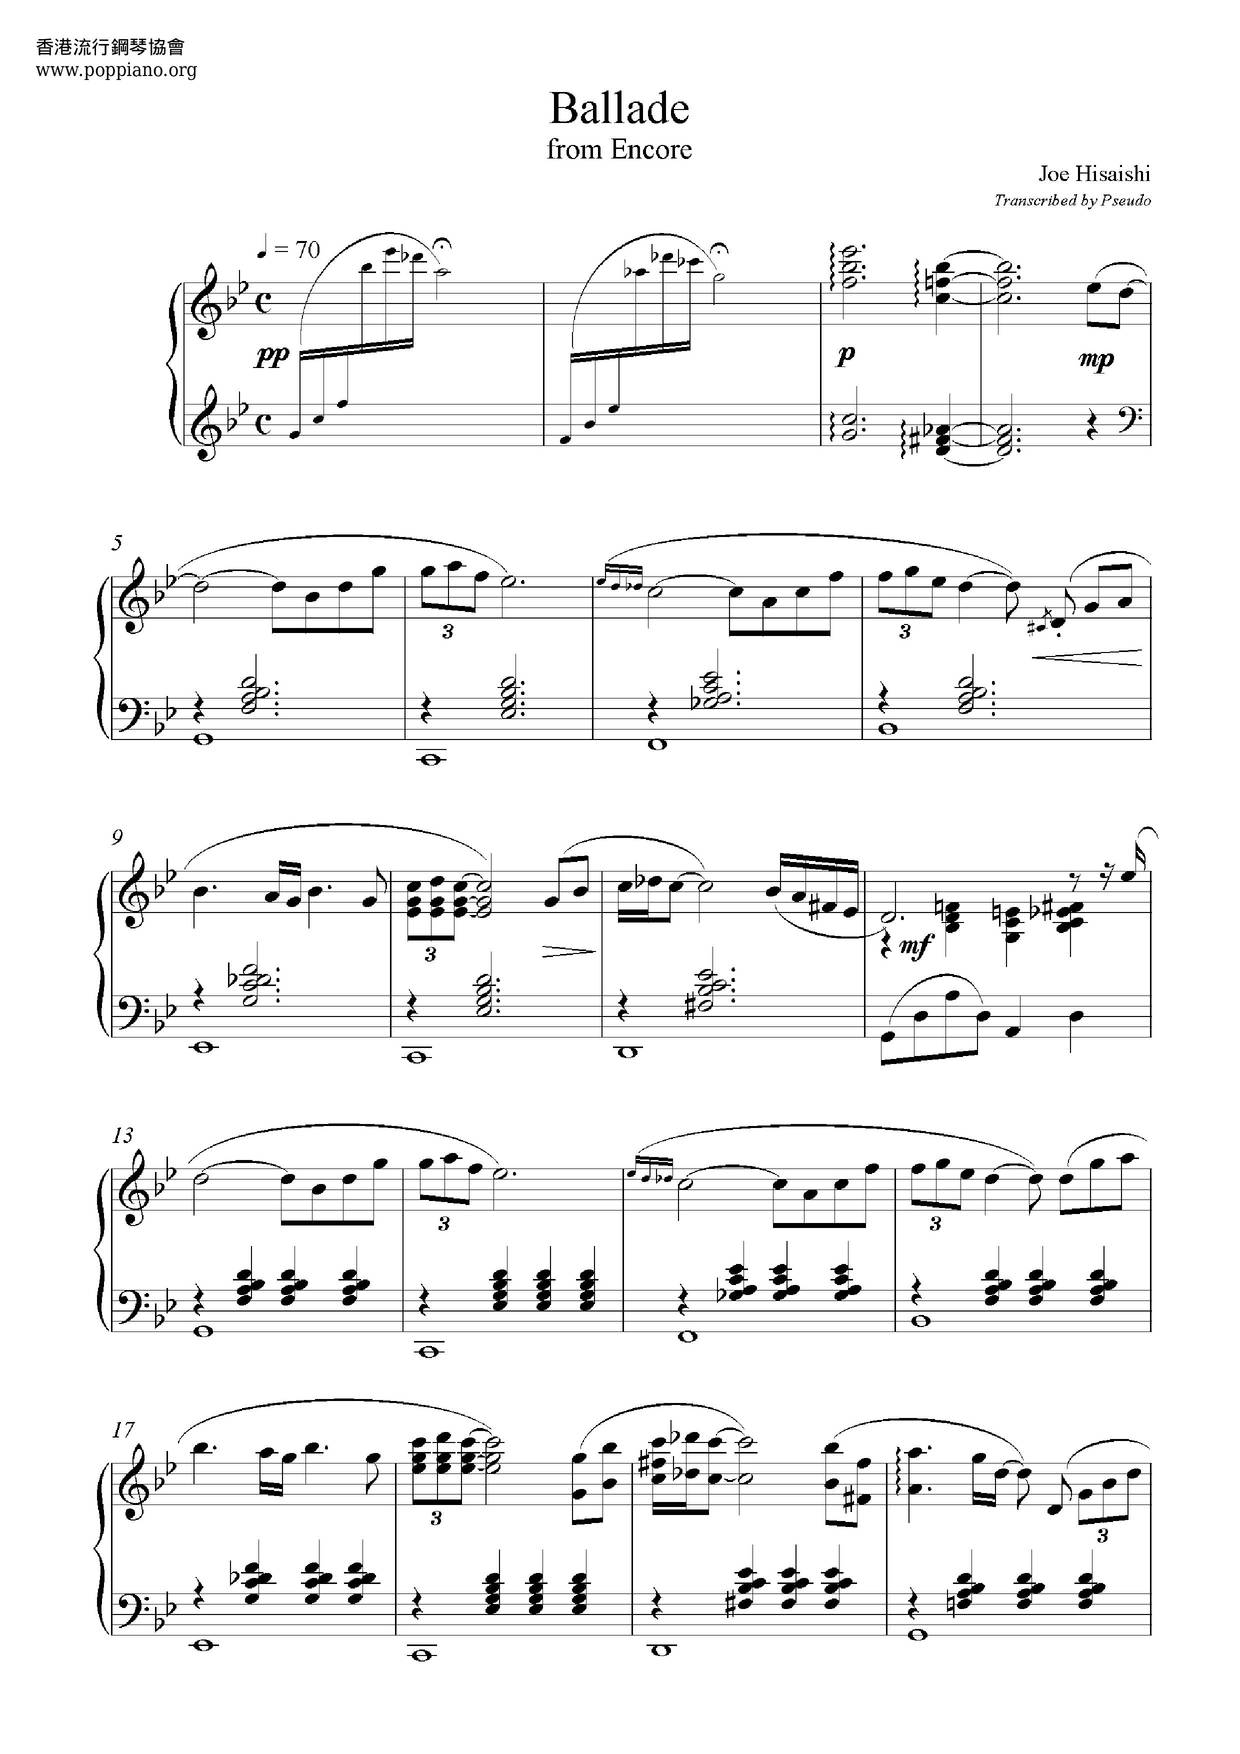 Ballade Score